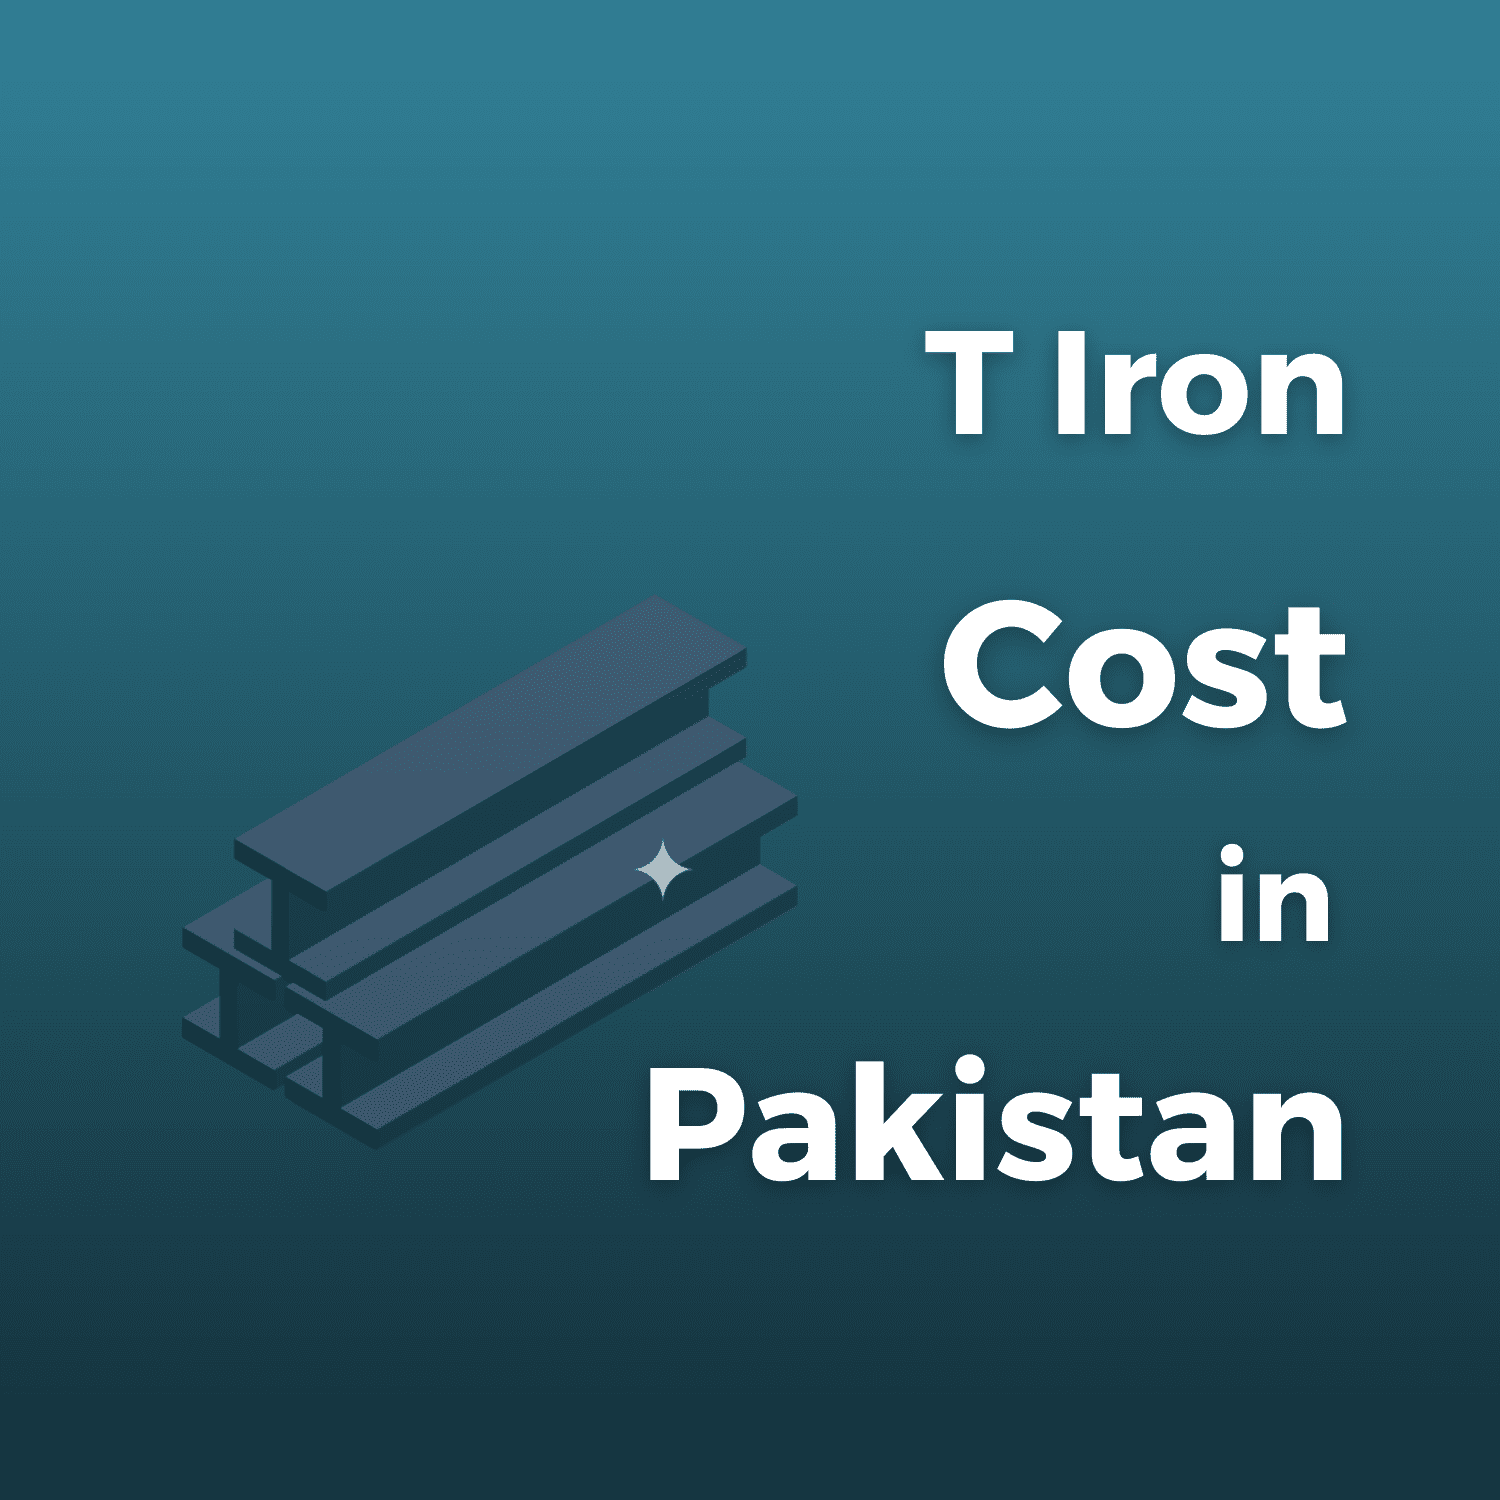 t iron price in pakistan